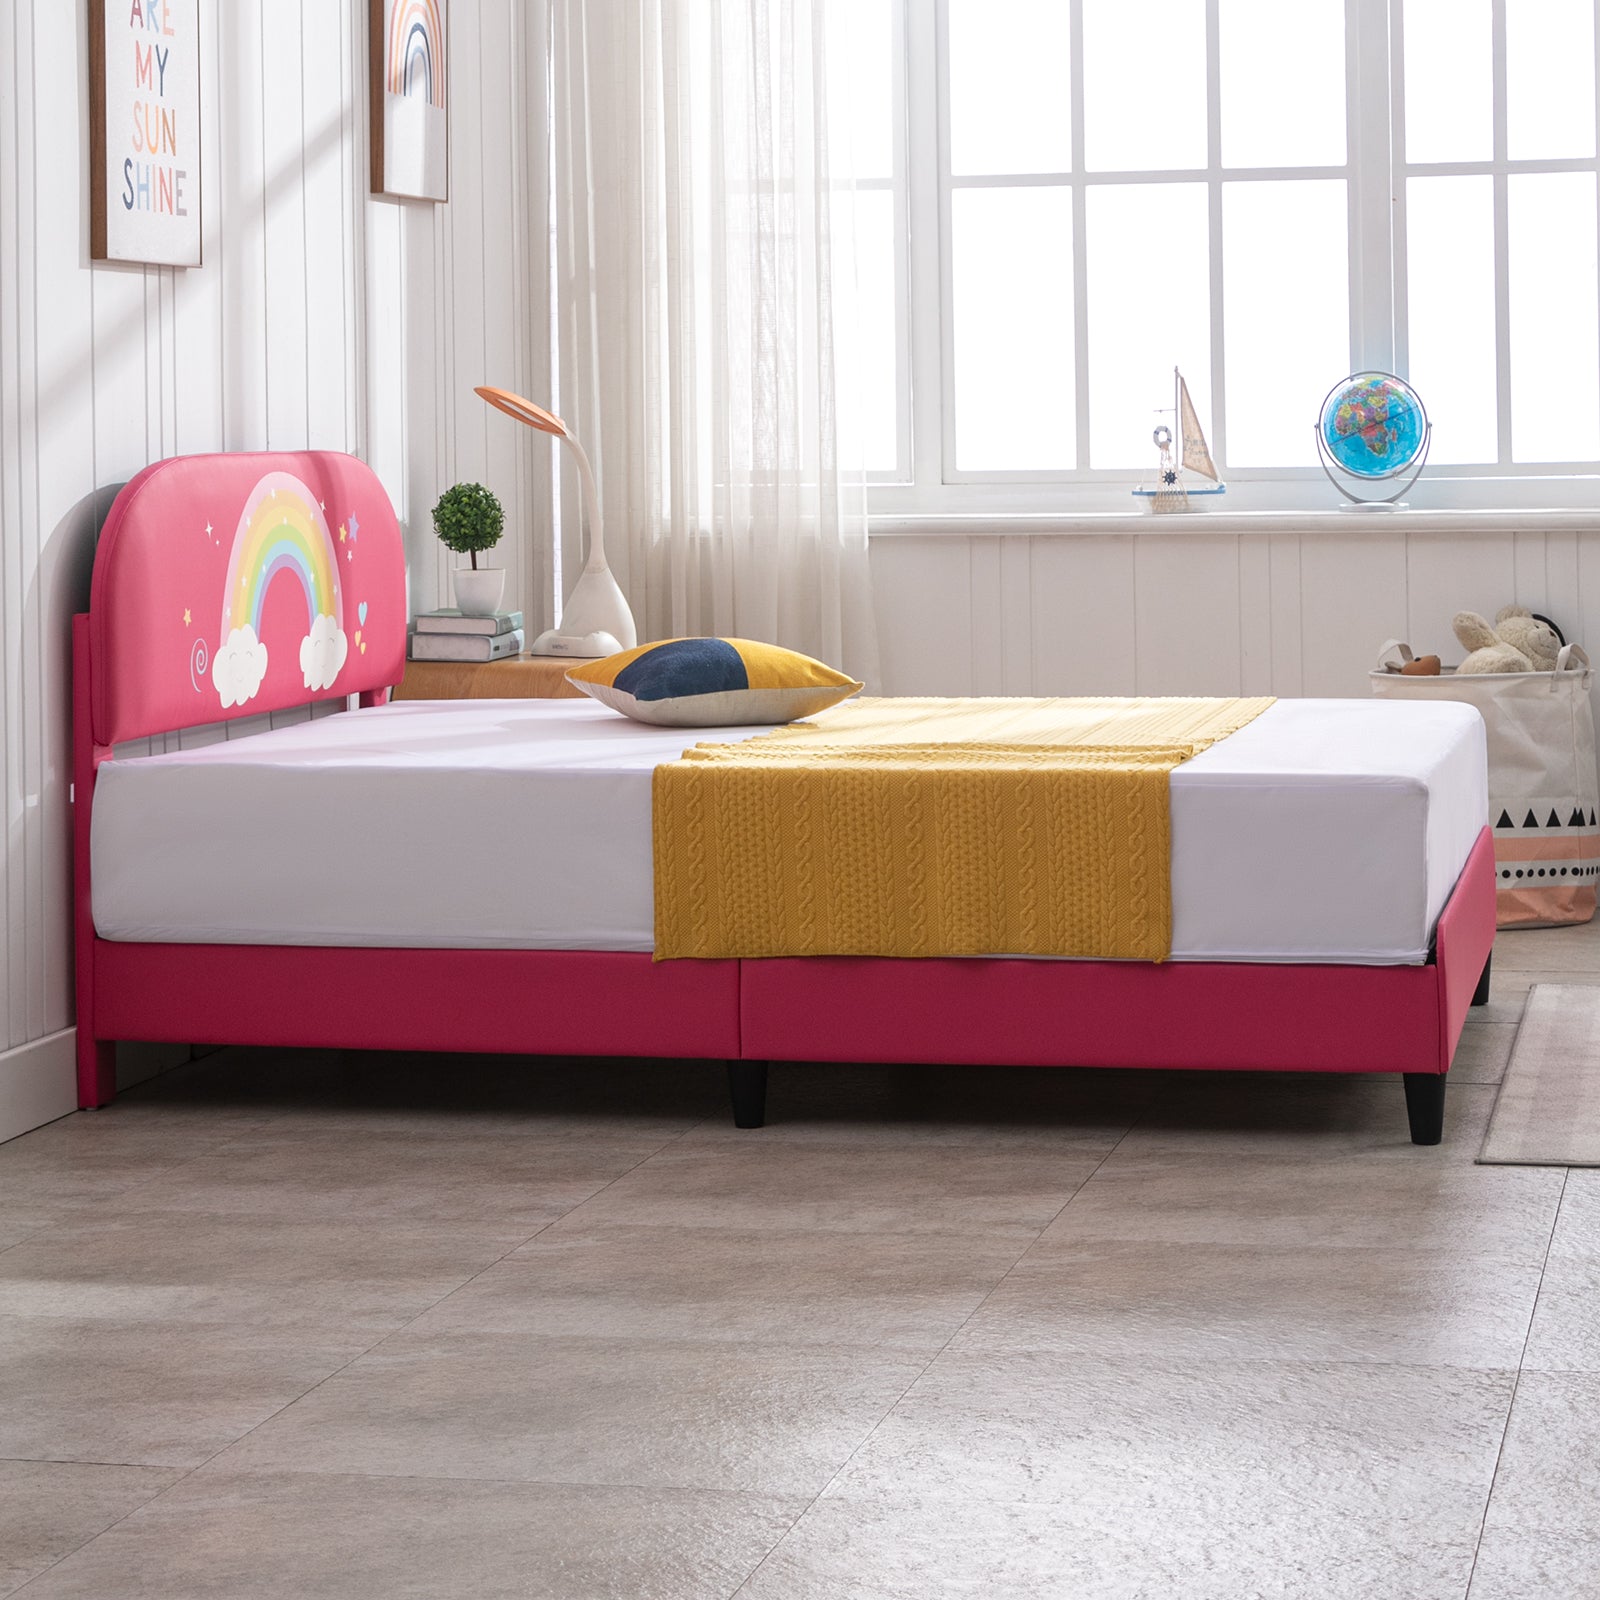 Mjkone Rainbow Pattern Upholstered Toddler Kids Bed